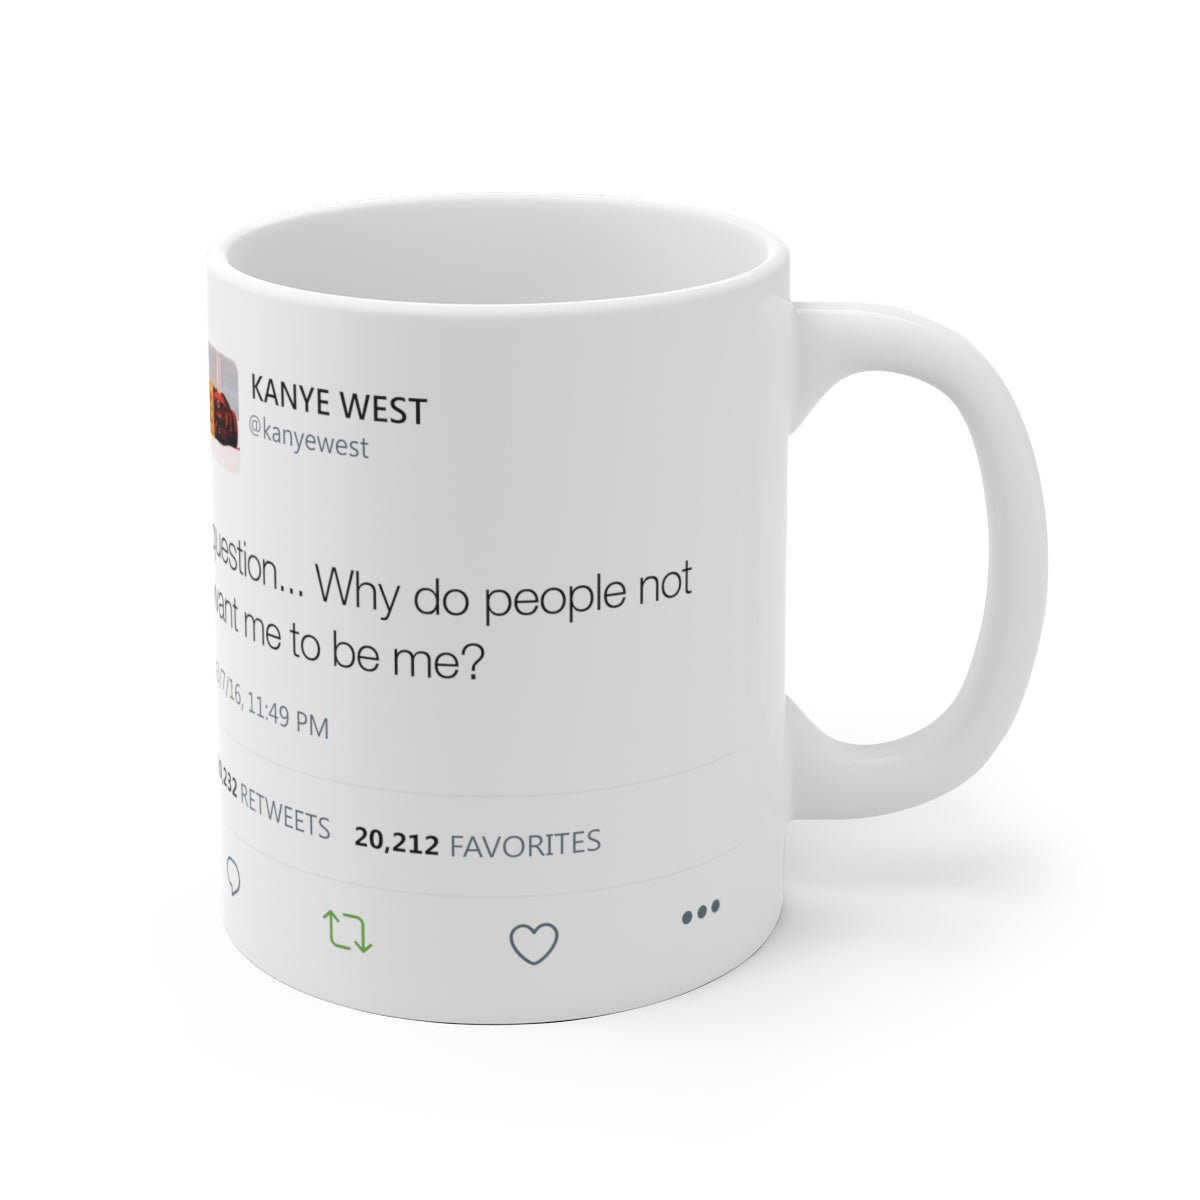 Why do people not want me to be me? Kanye West Tweet Mug-Archethype